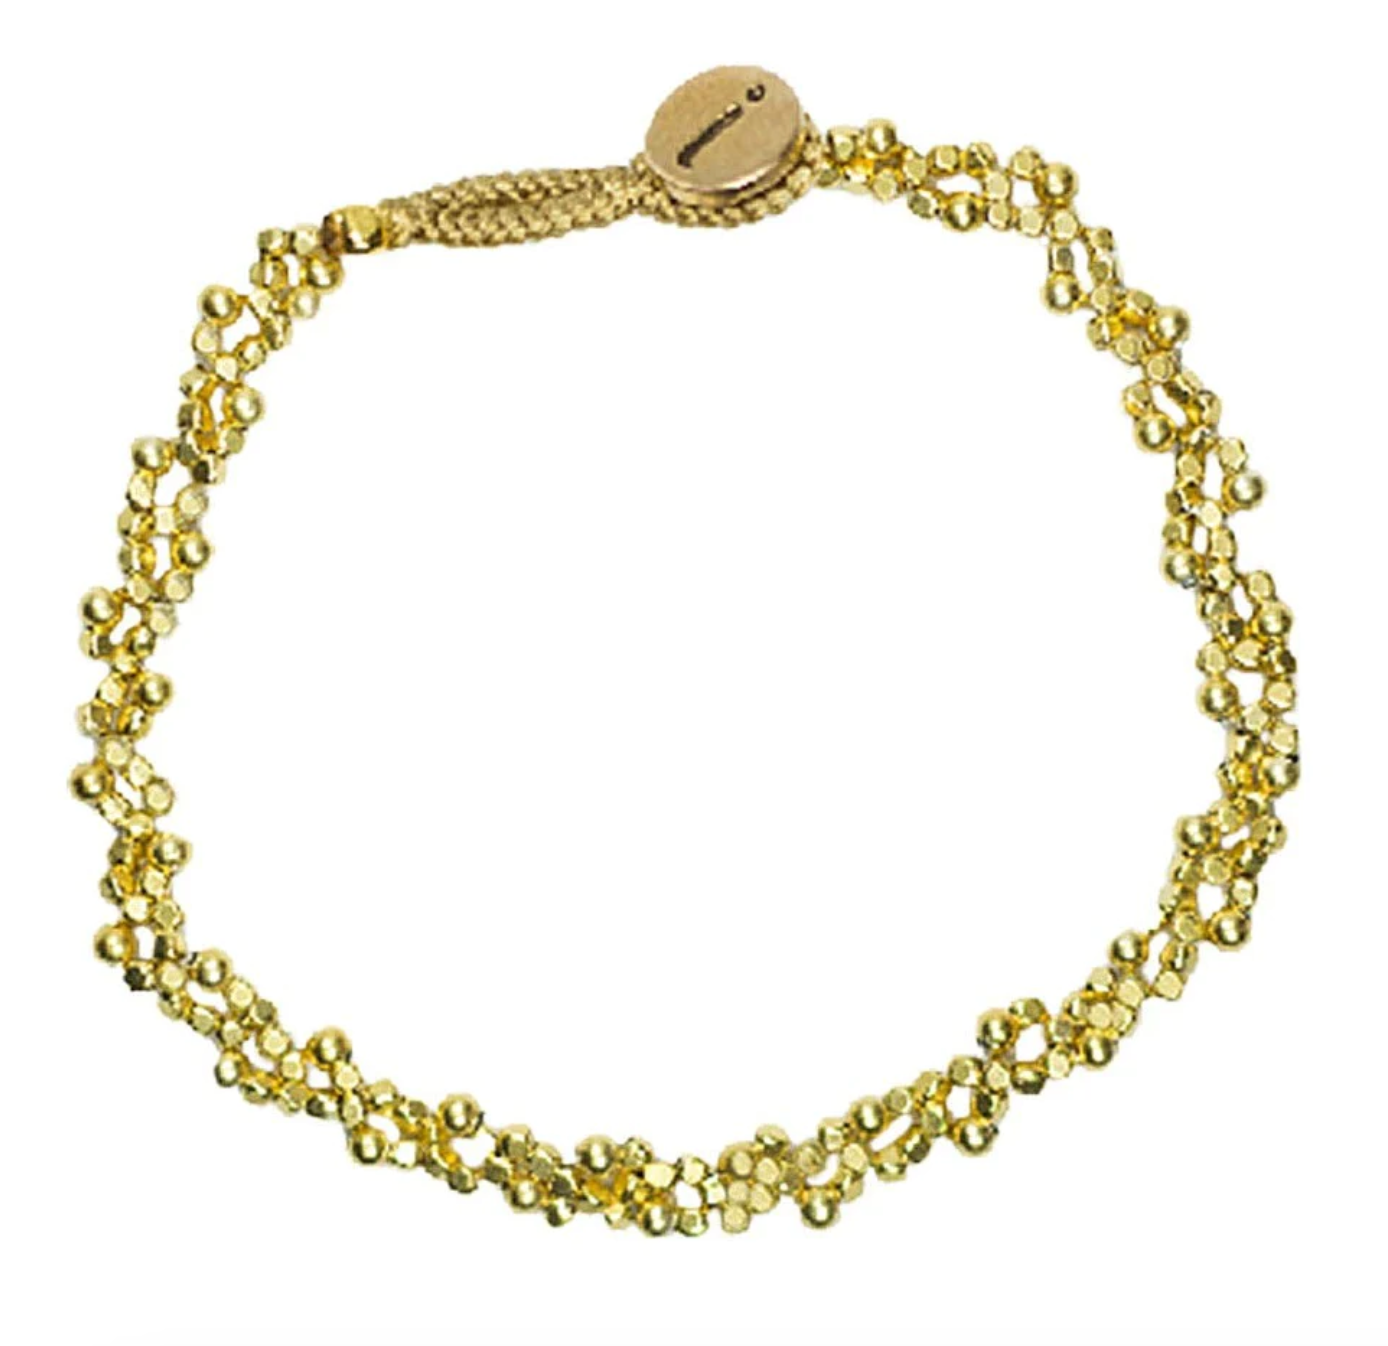 Peggy Lace Bracelet - Gold